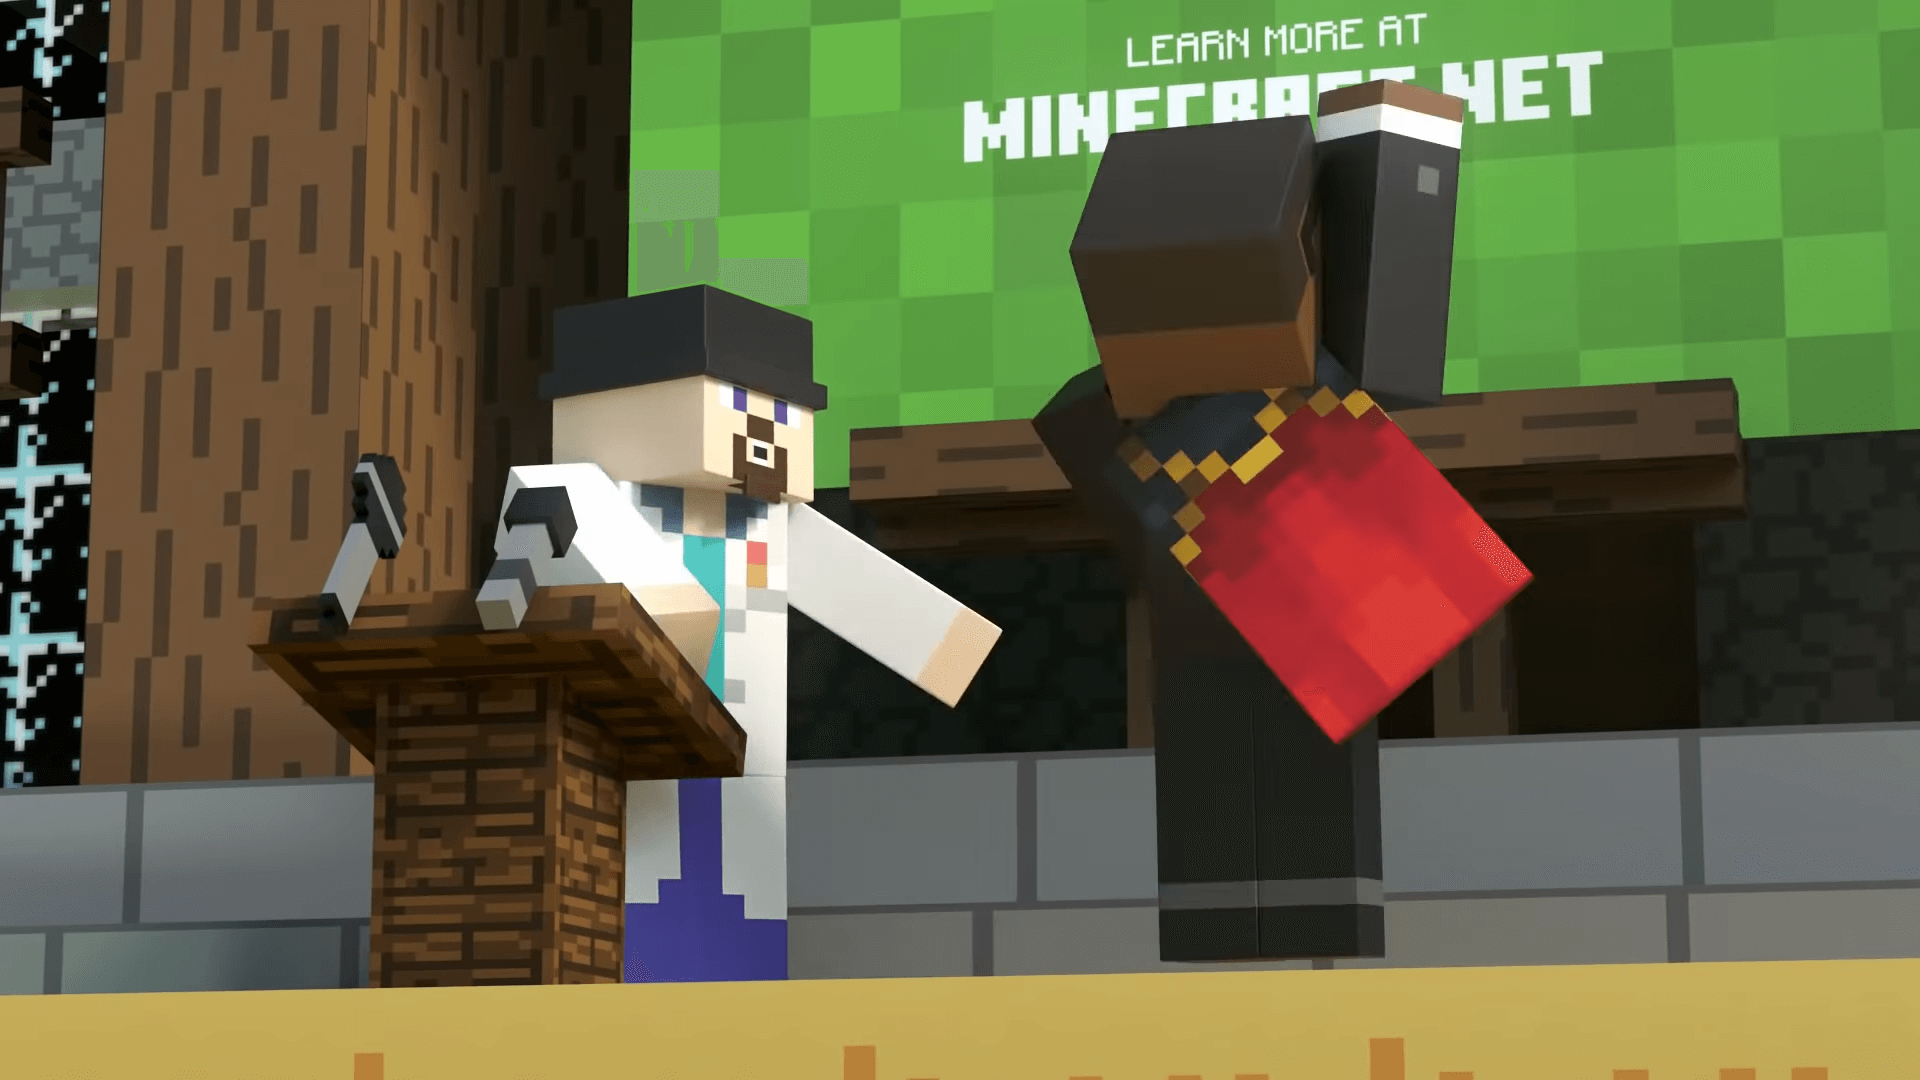 Minecraft Account Migration Error - Microsoft Community